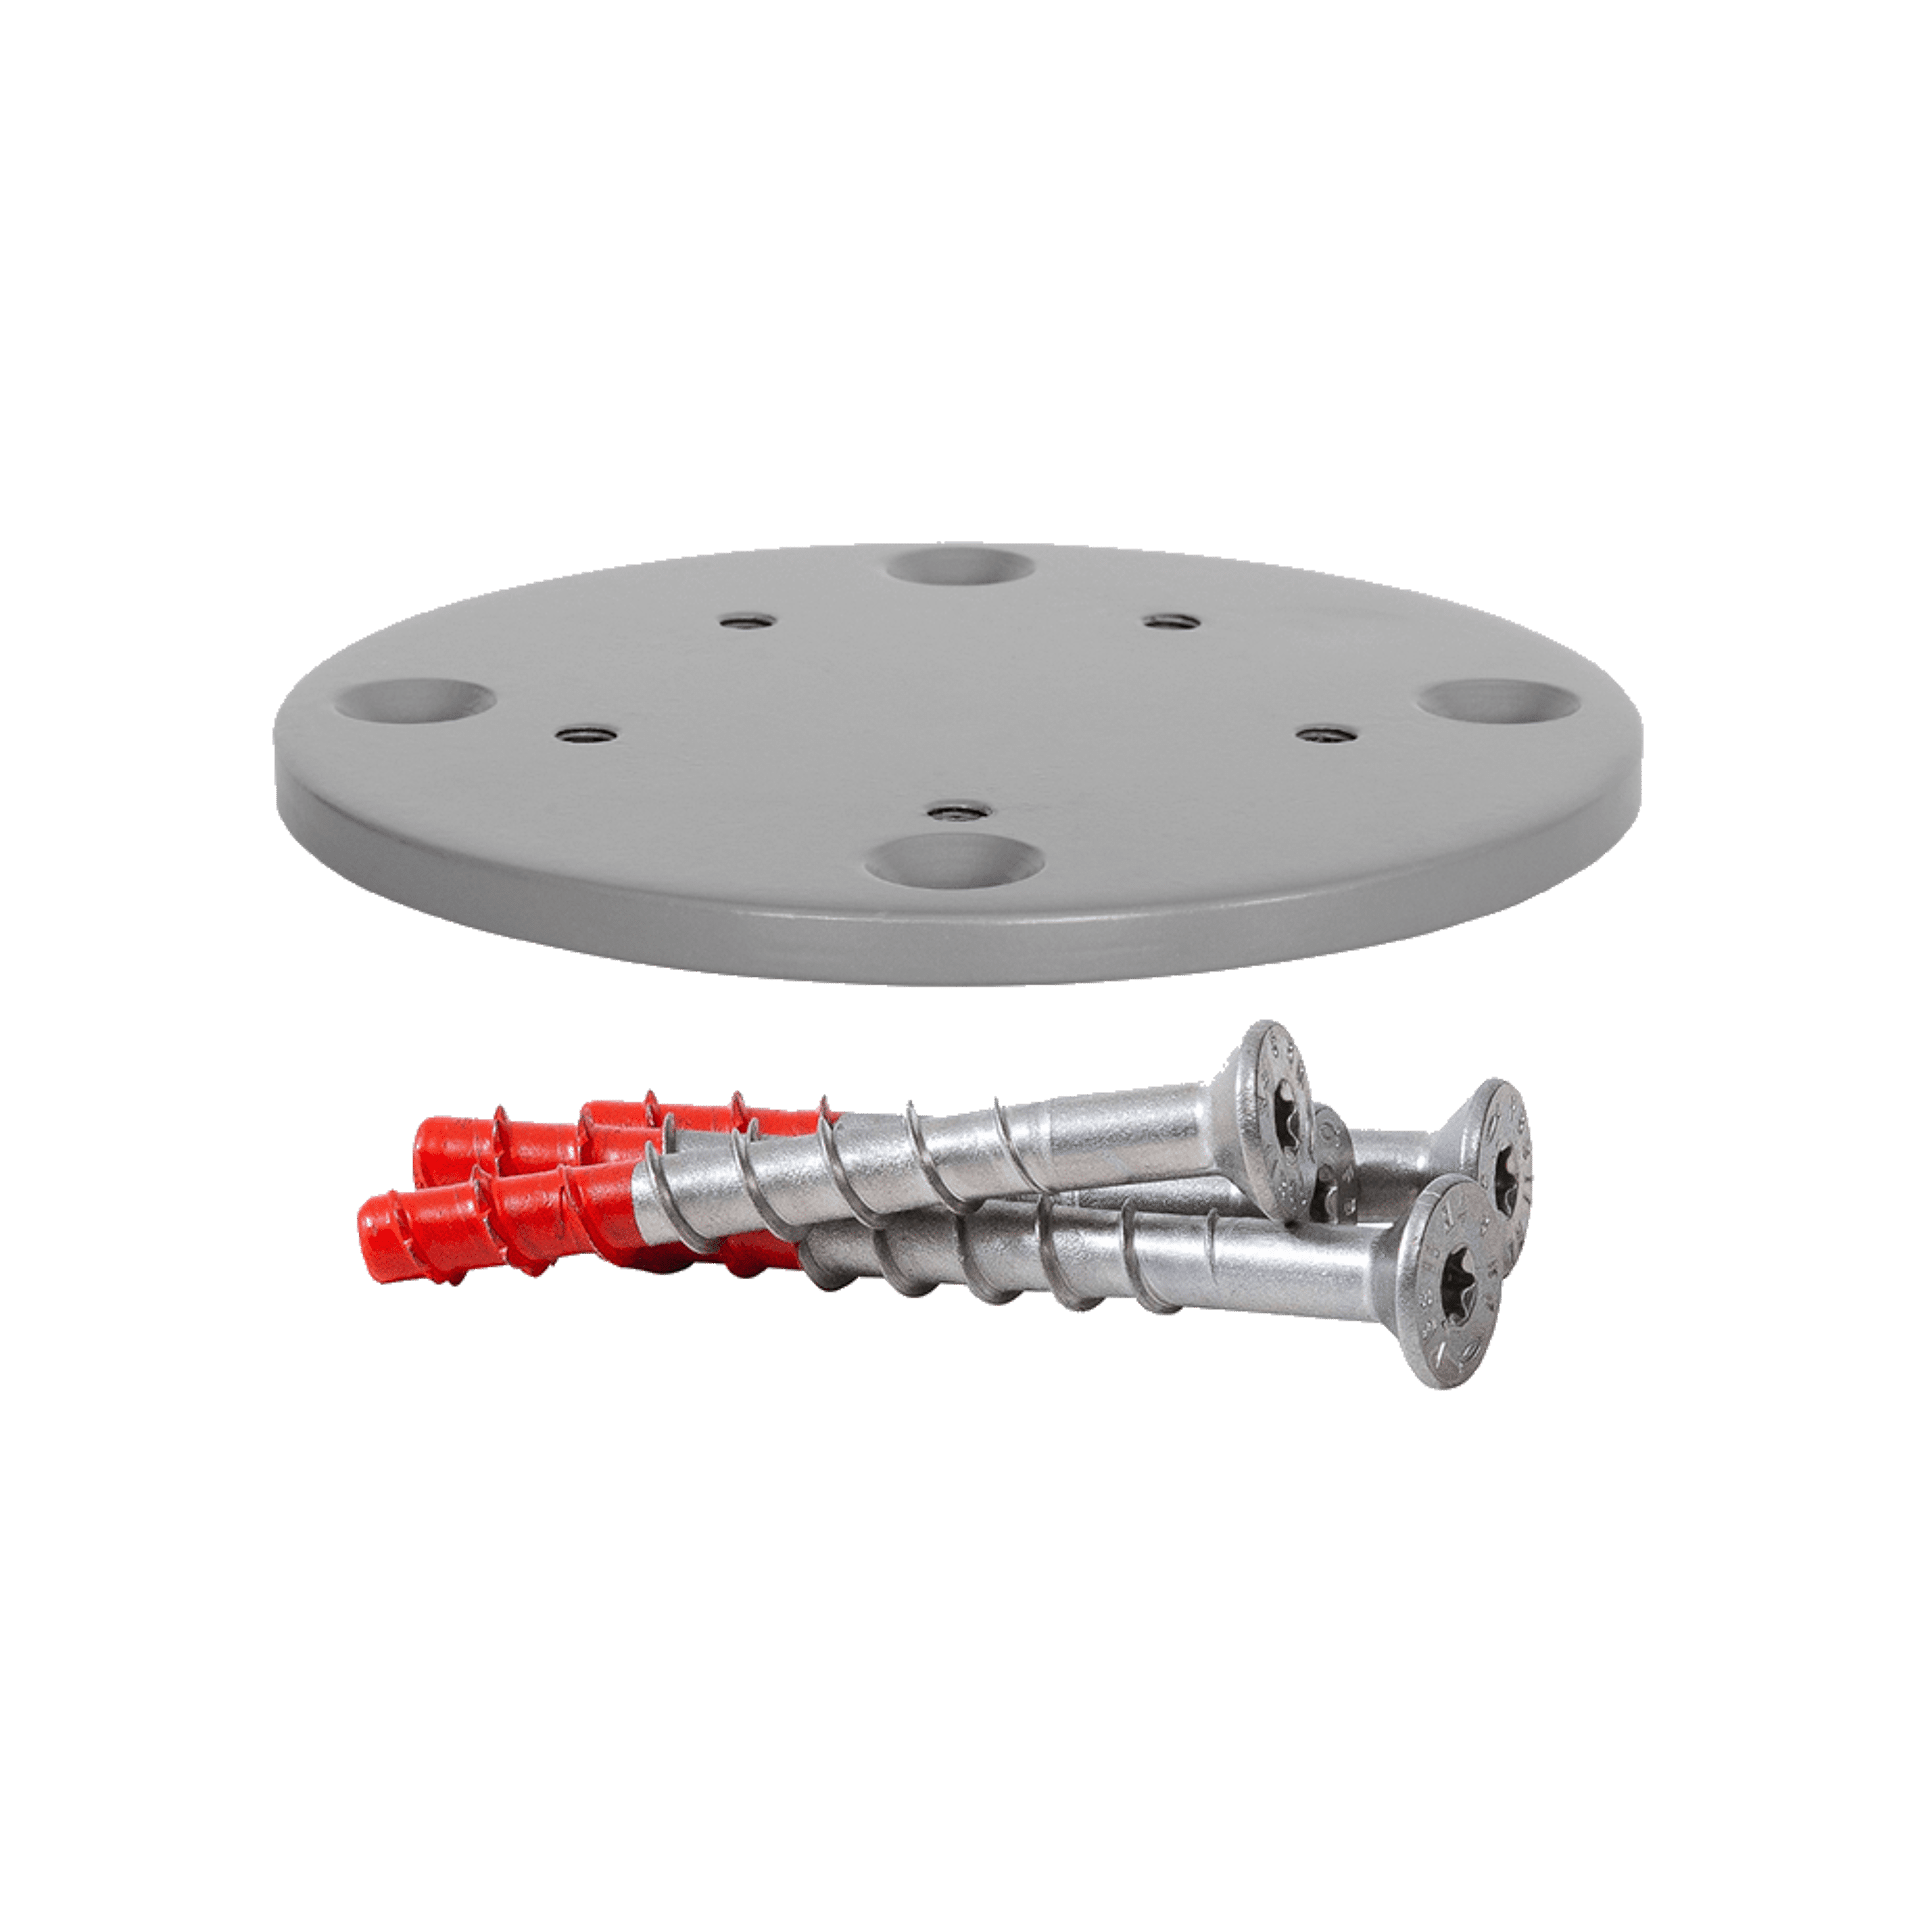 stellar cantilever install kit plateconcrete screws